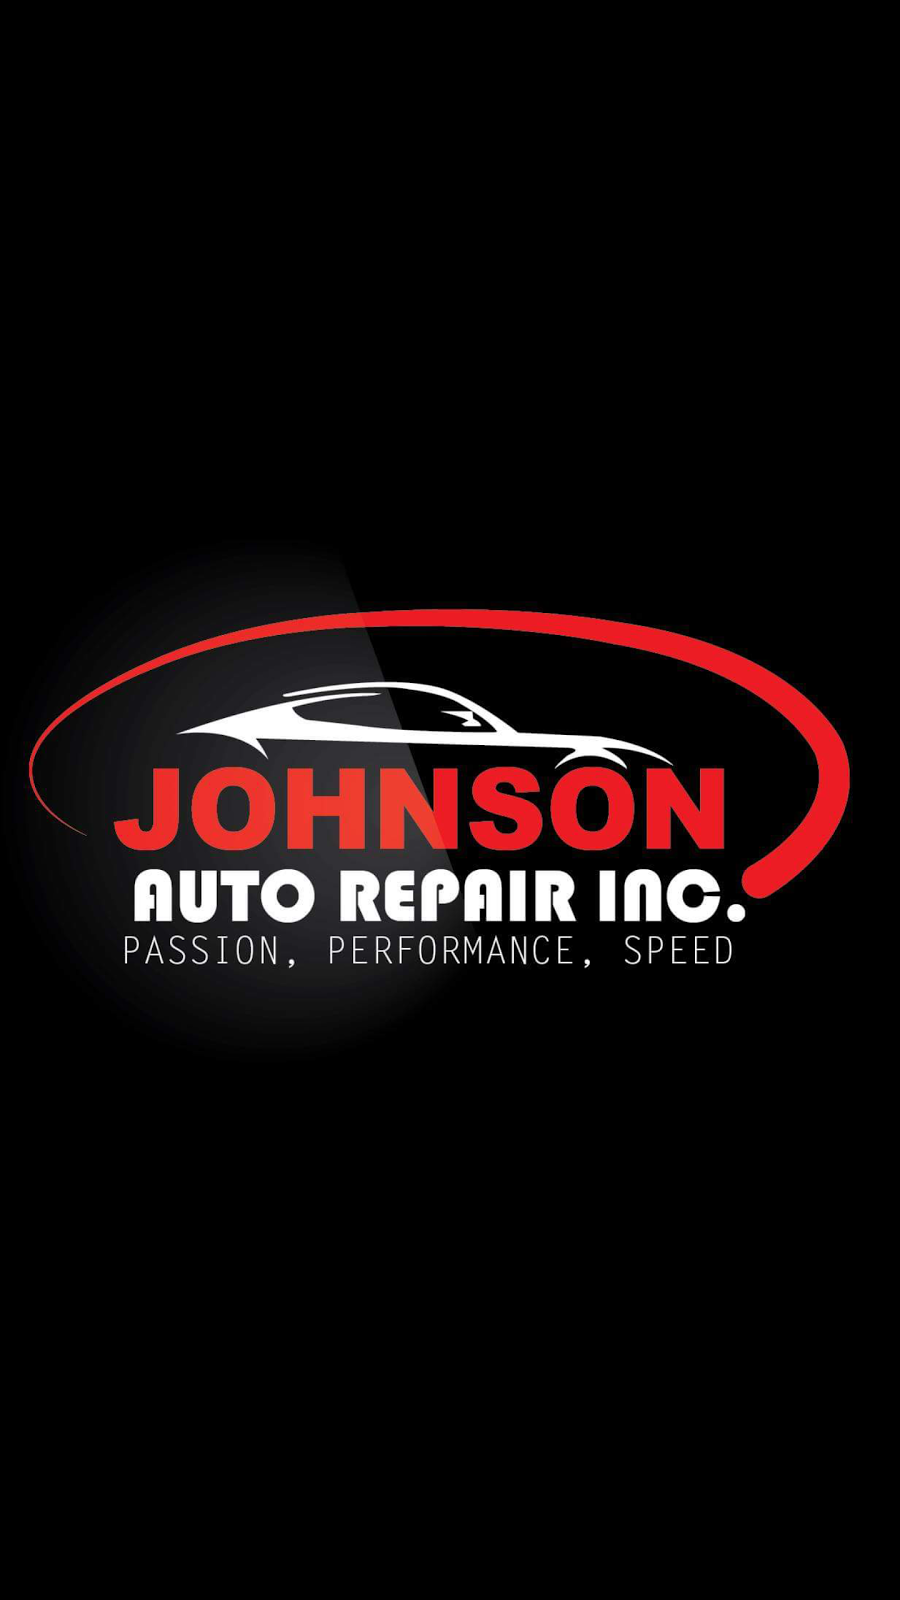 Photo of Johnson Auto Repair in Corona City, New York, United States - 3 Picture of Point of interest, Establishment, Car repair